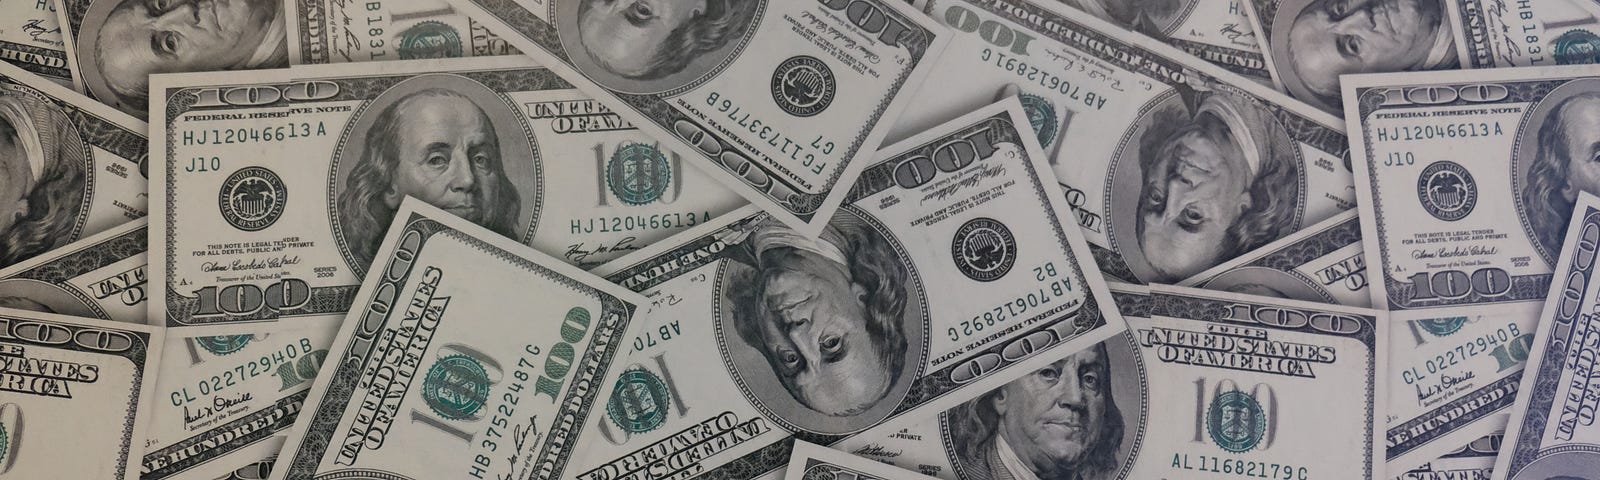 Dollar bills